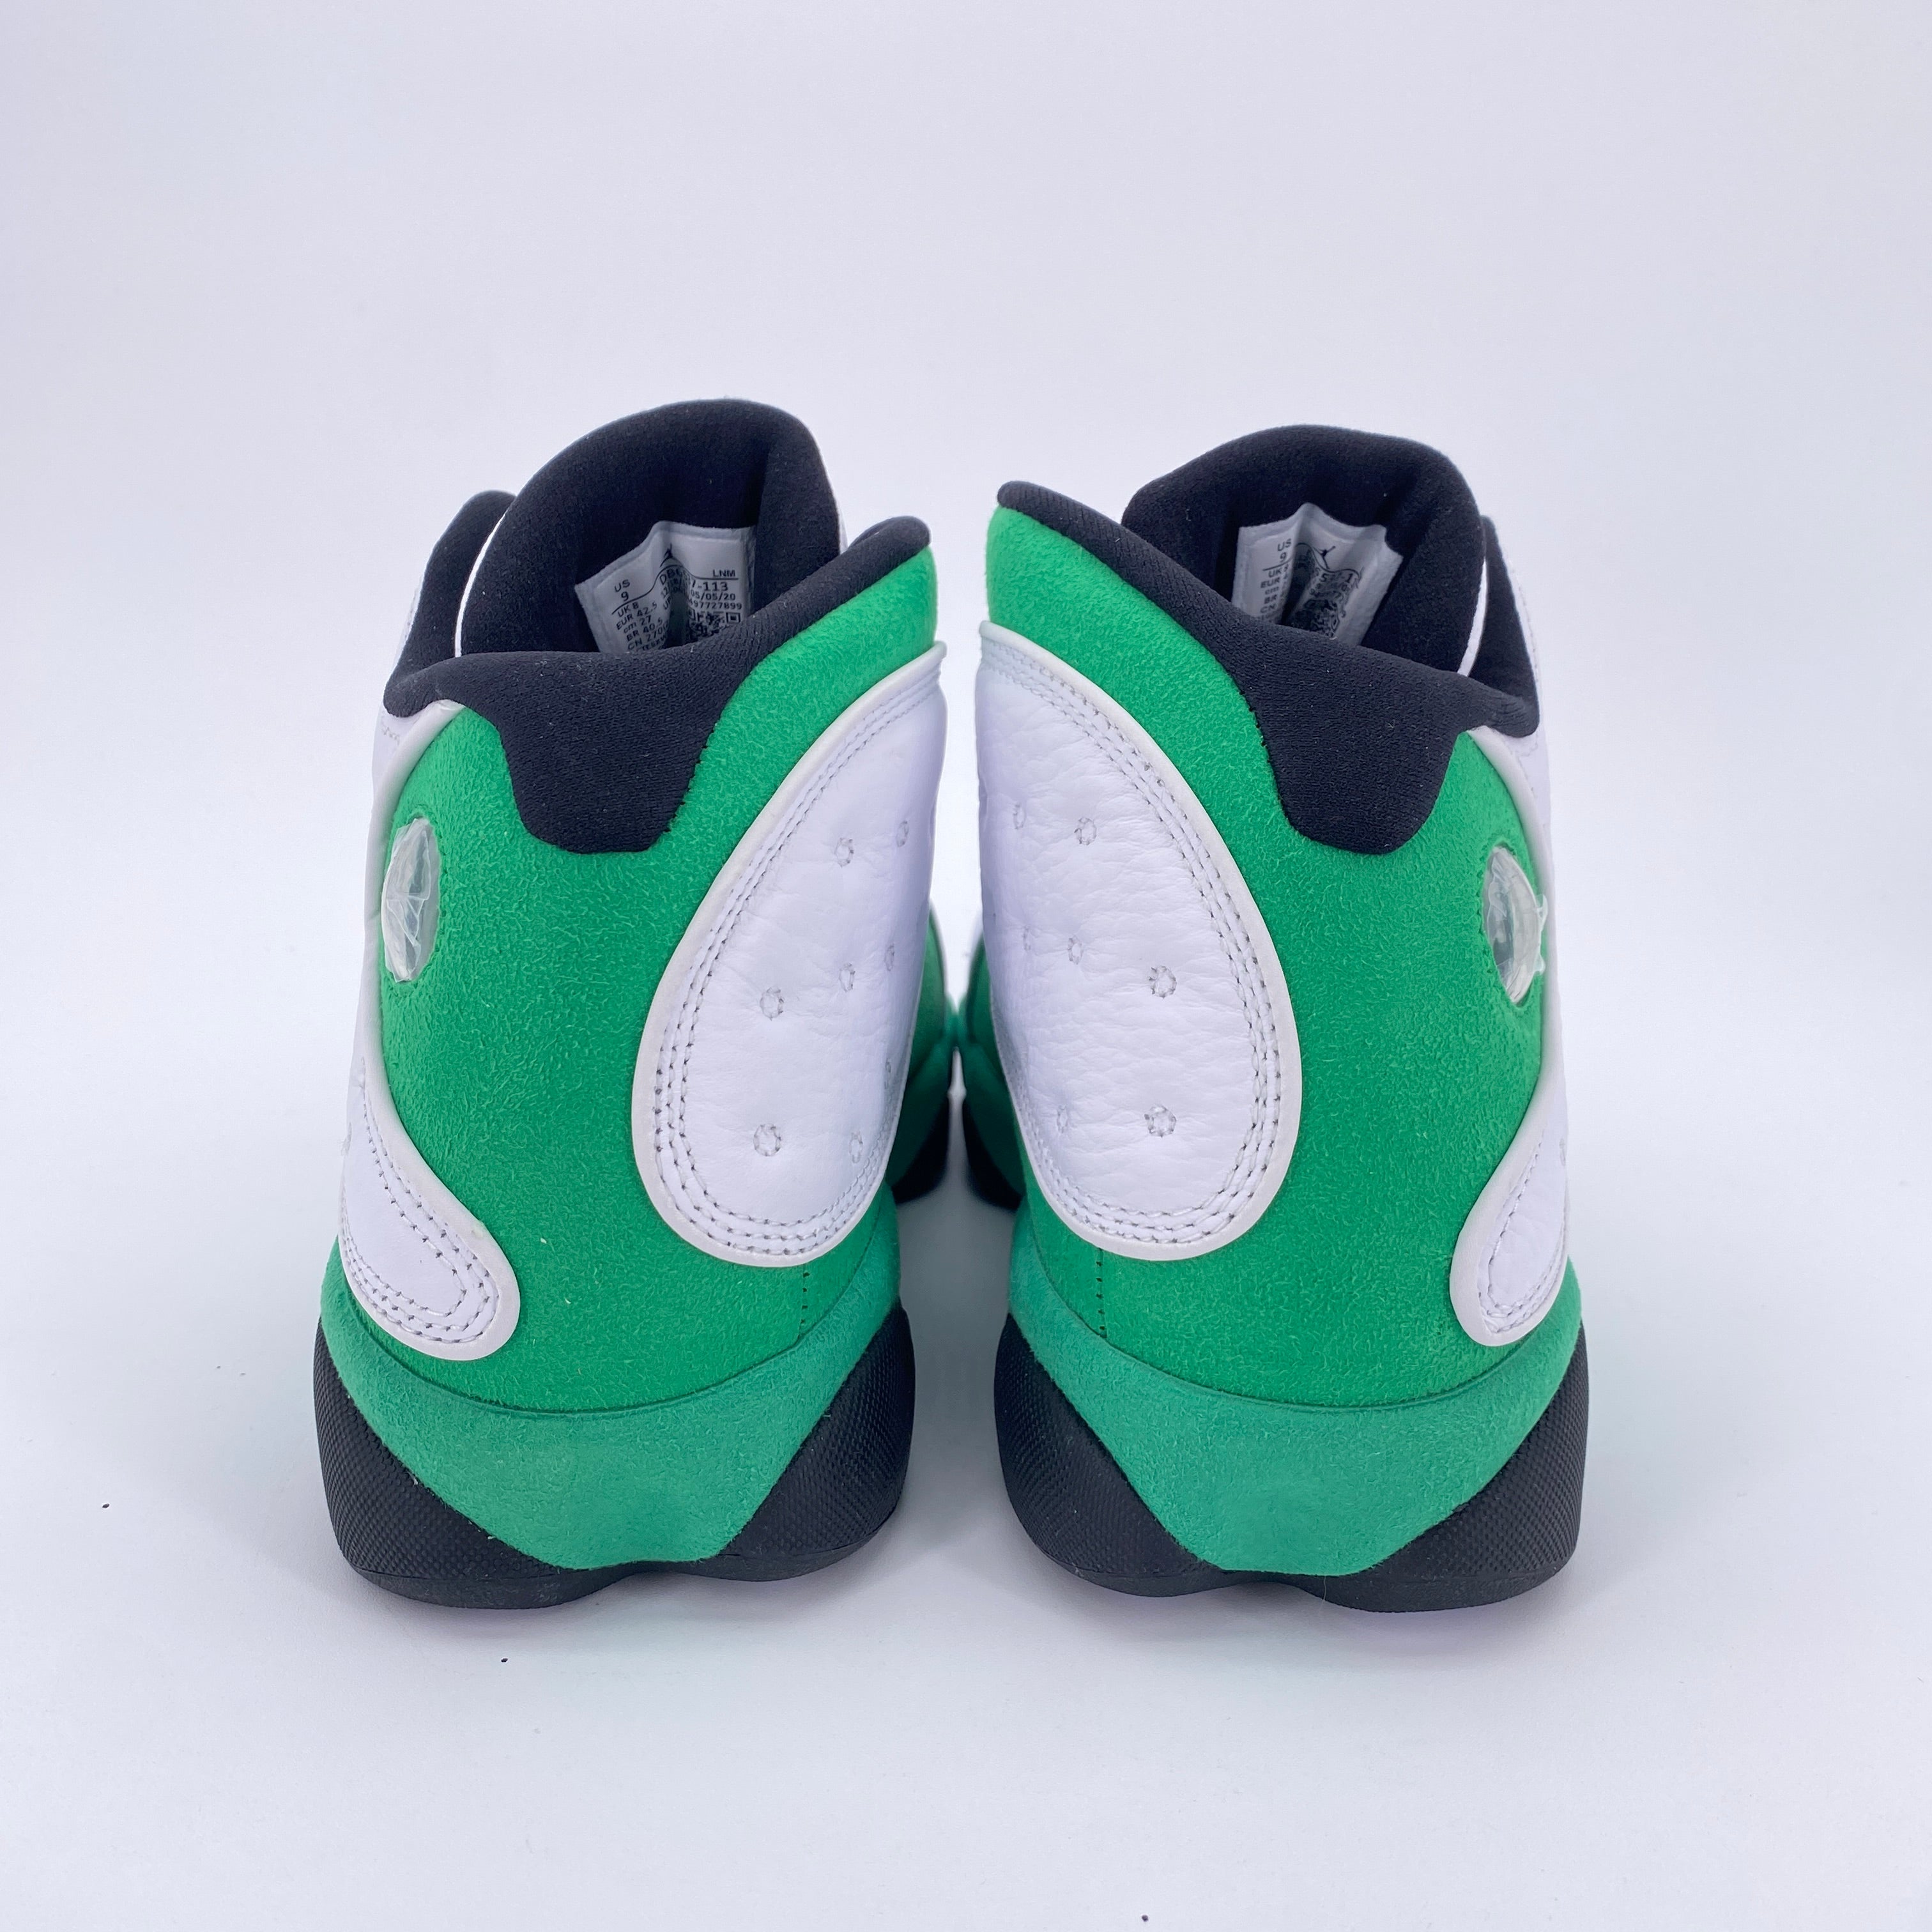 Air Jordan 13 Retro "Lucky Green" 2020 New Size 9